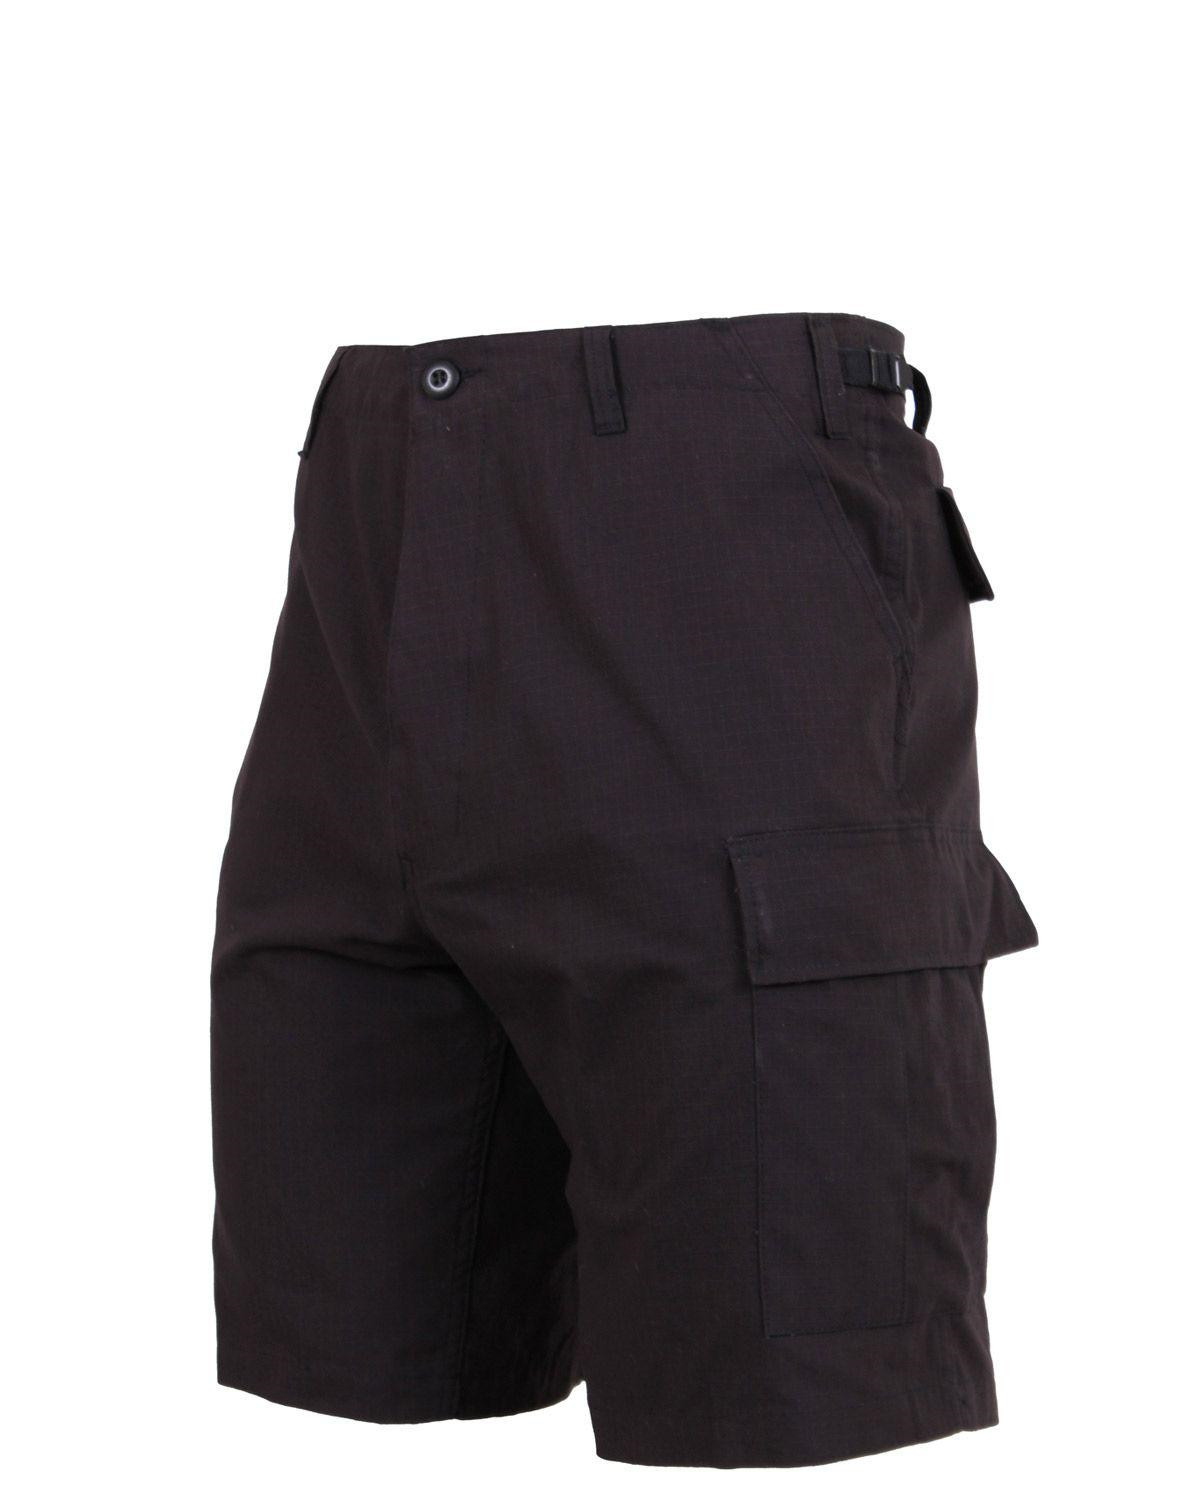 Rothco BDU Shorts i Rip-Stop (Sort, Medium / 31"-35")